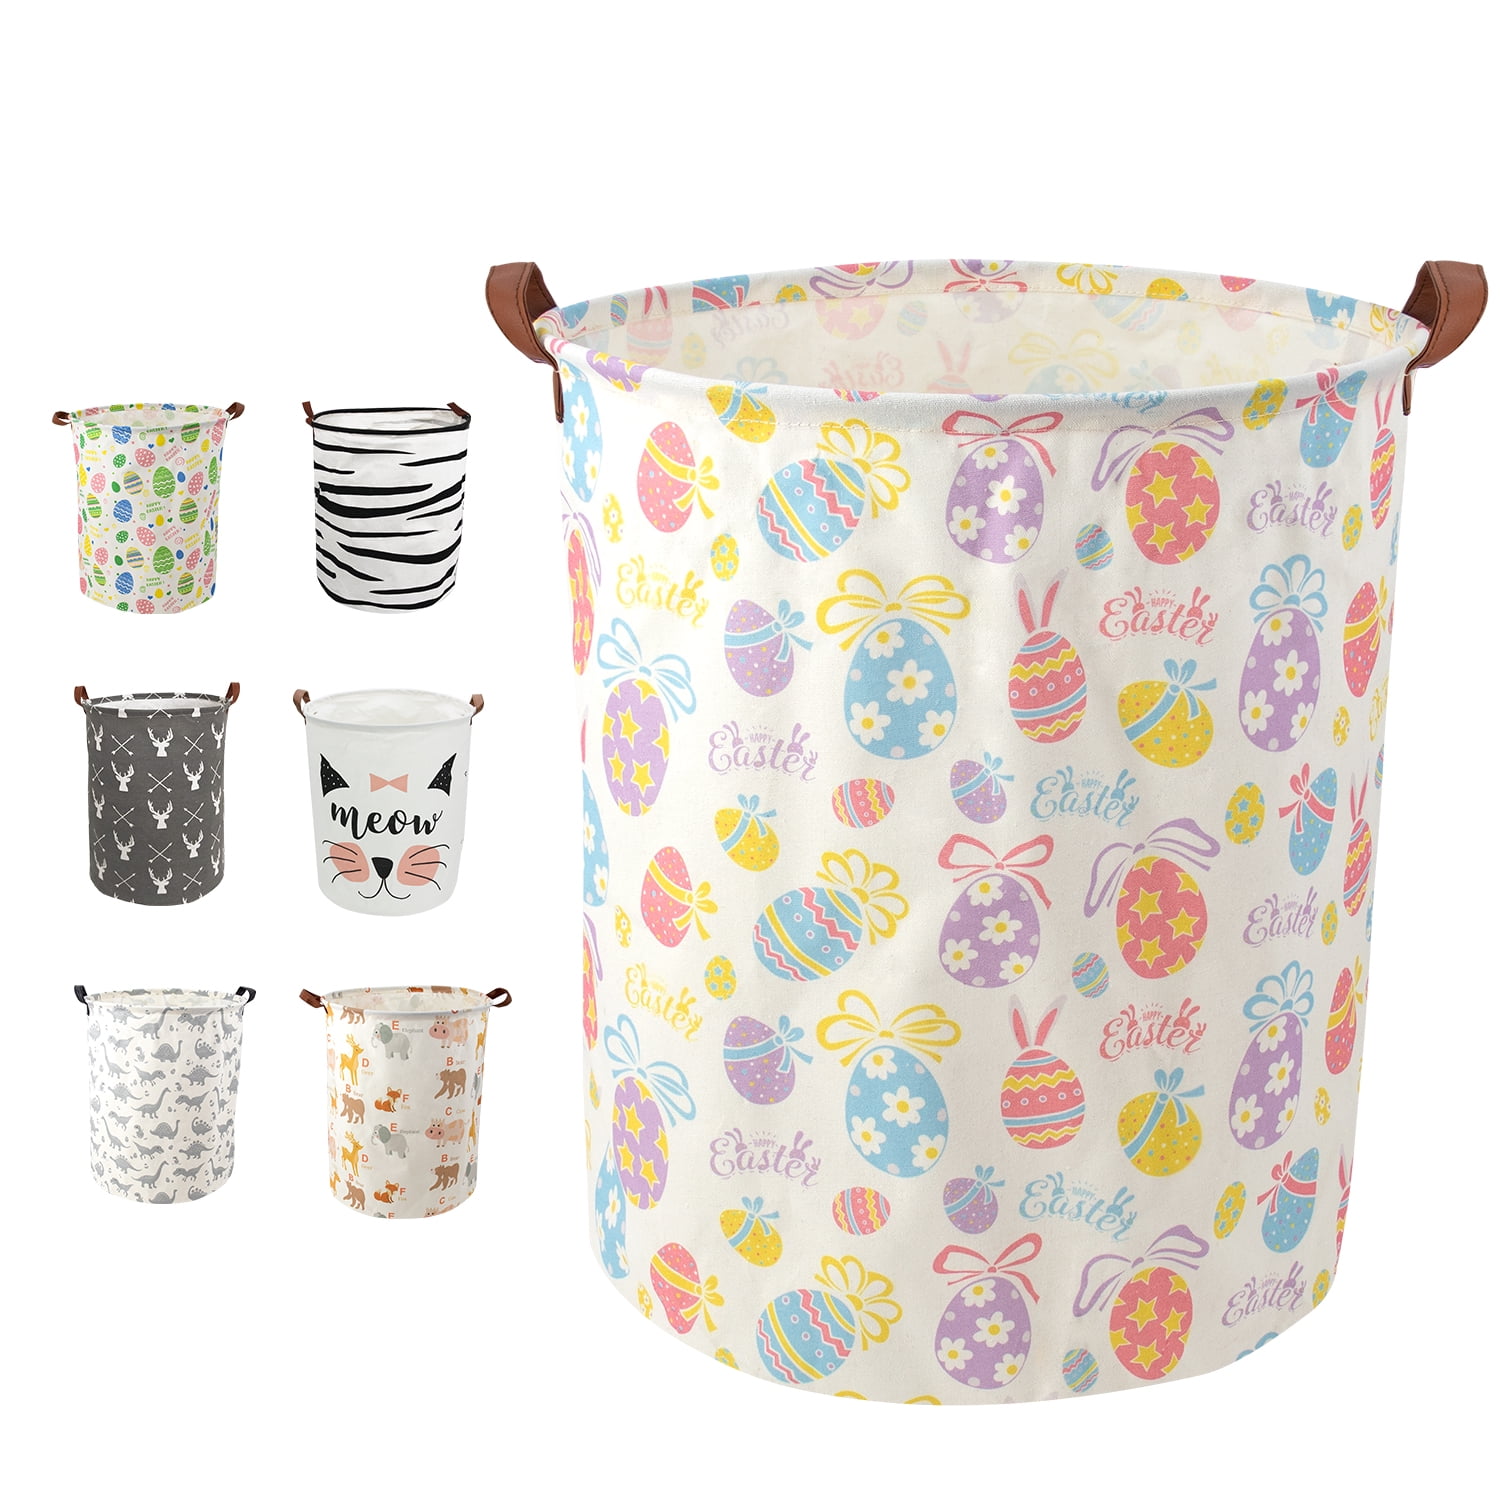 1pc Round Dirty Clothes Basket, Fabric Laundry Basket, Portable Laundry  Hamper, Foldable Waterproof Dustproof Multifunctional Storage Bucket,  Househol